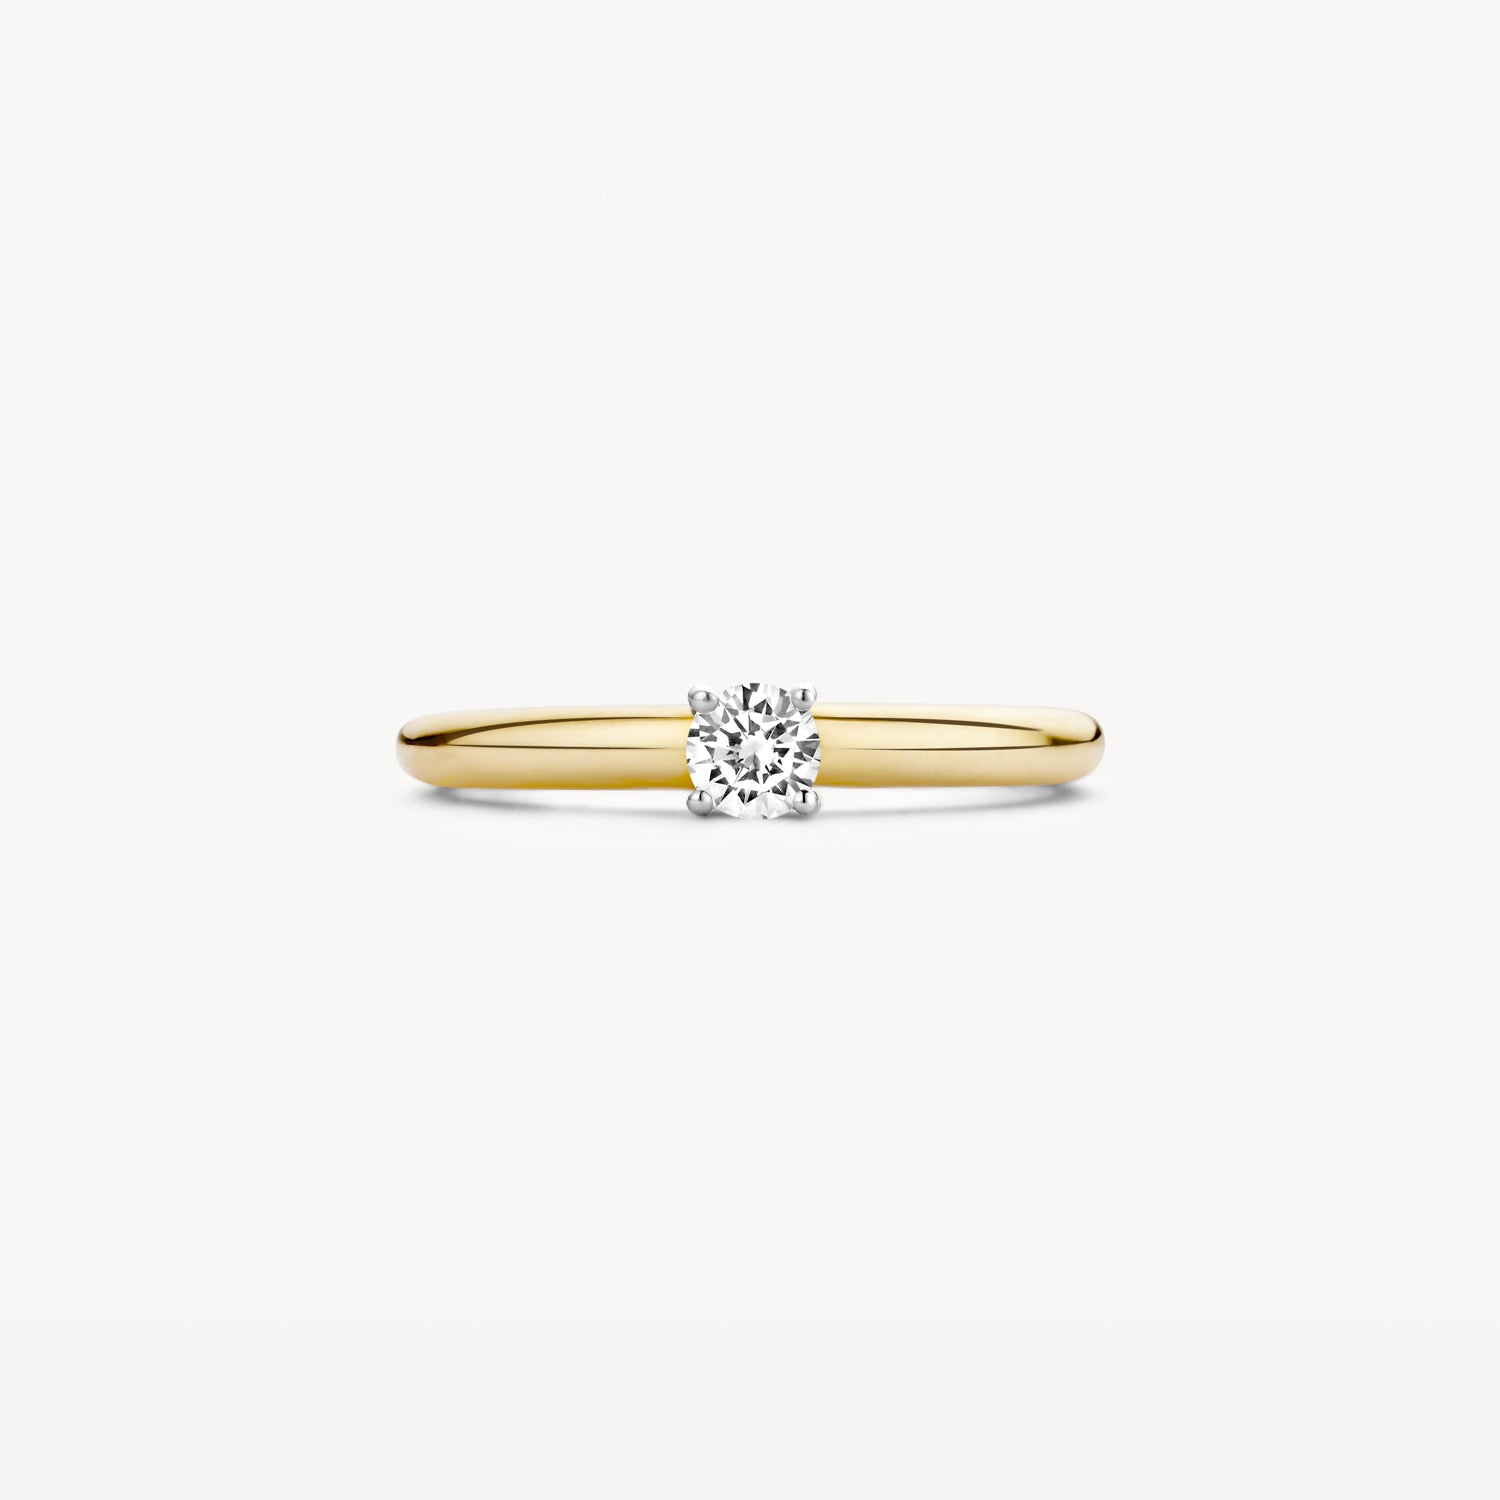 Ring 1067BZI - 14k Gold and white gold with zirconia